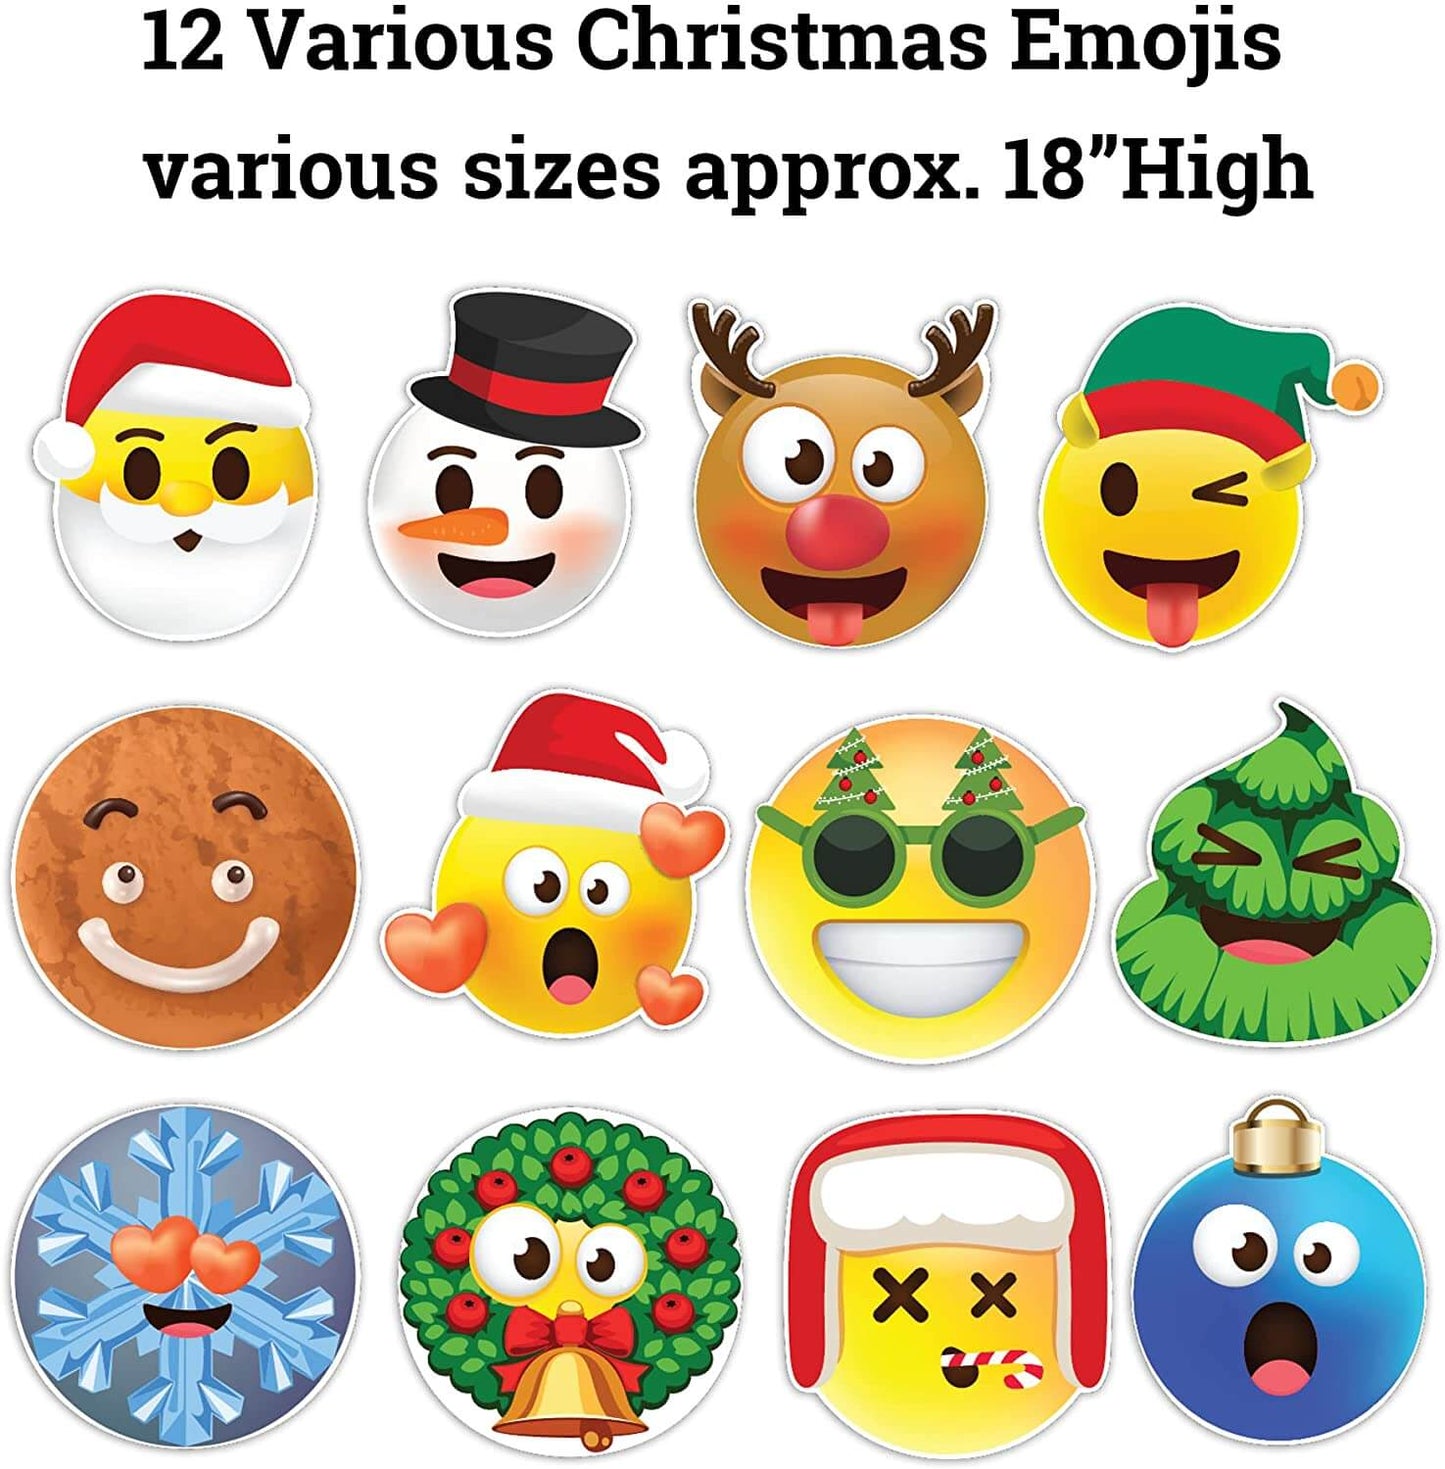 Christmas emoji yard sign accessories